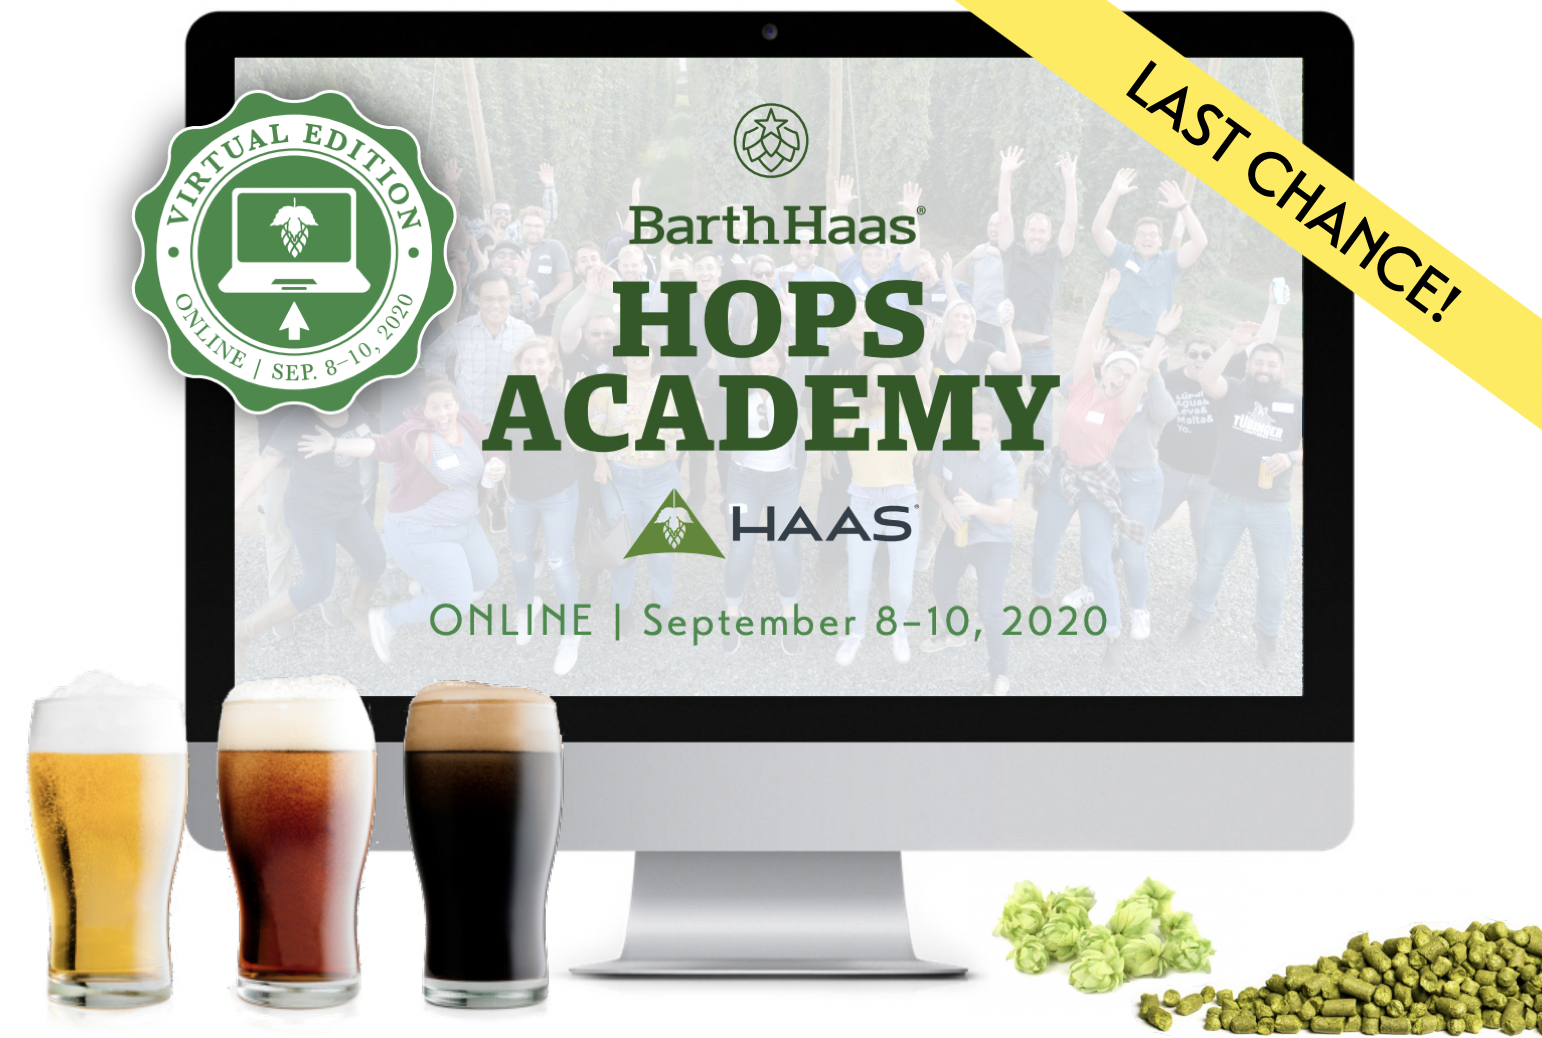 BarthHaas Hops Academy - Virtual Edition